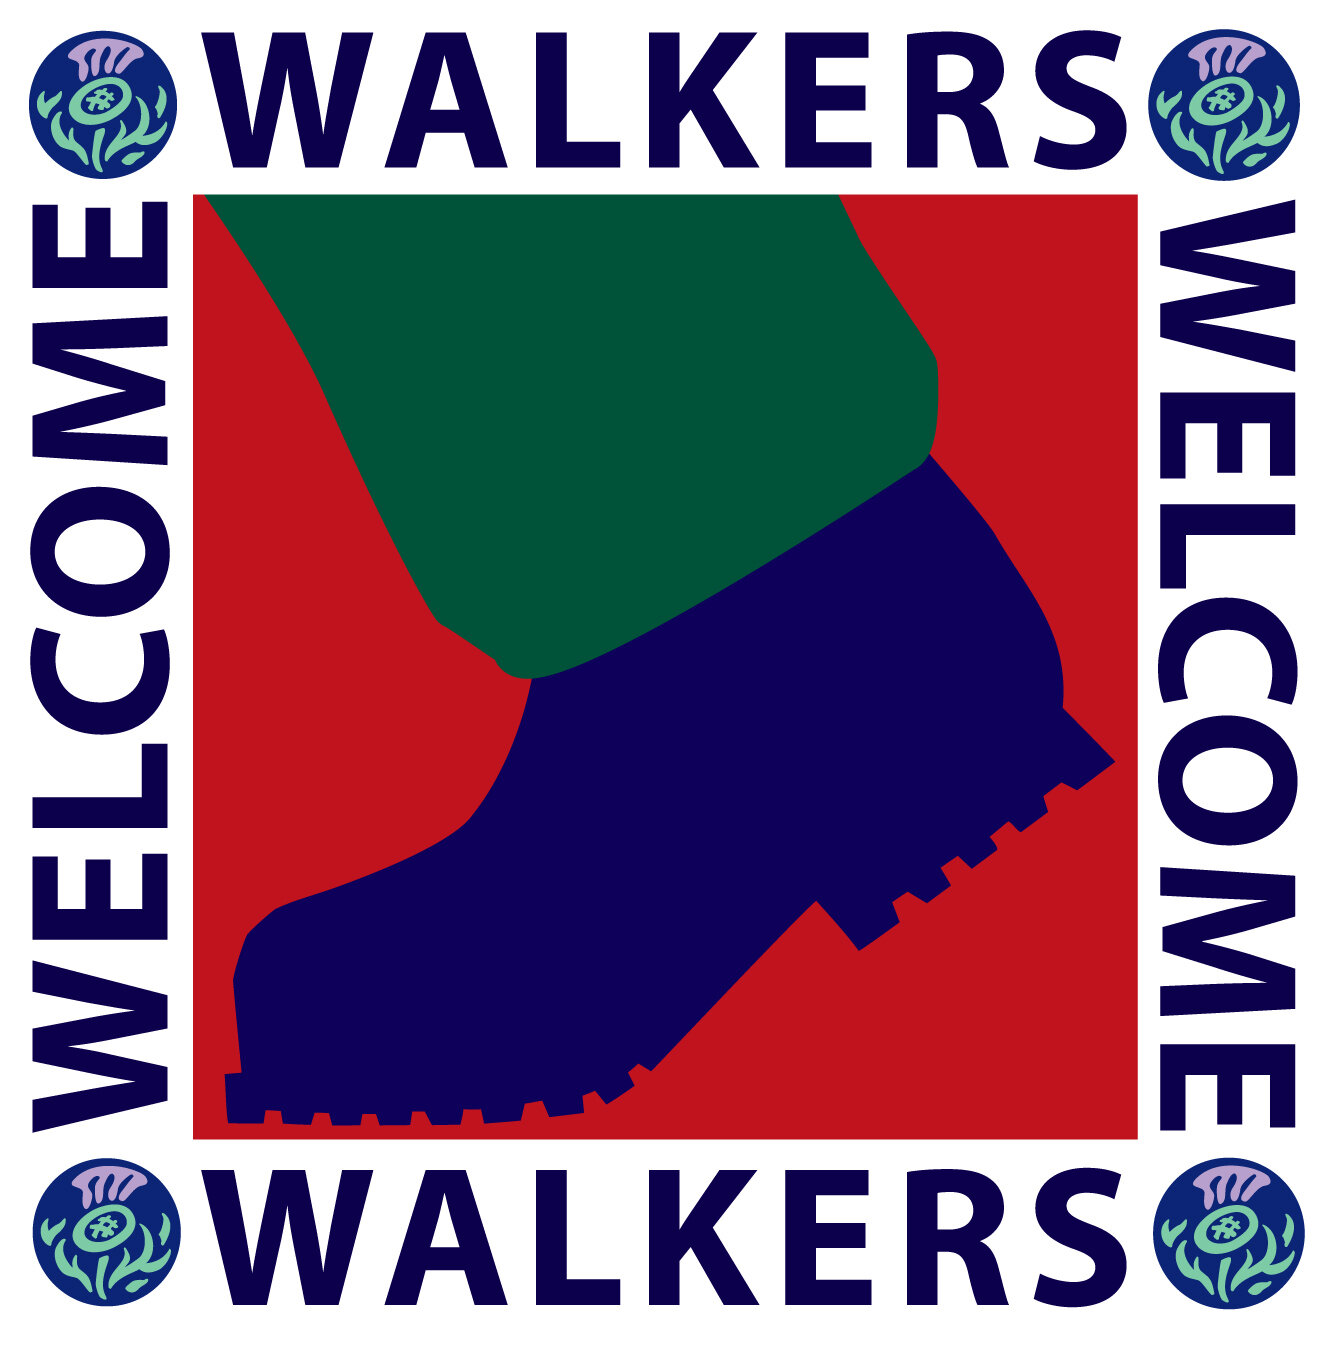 Walkers Welcome Scheme Logo.jpg